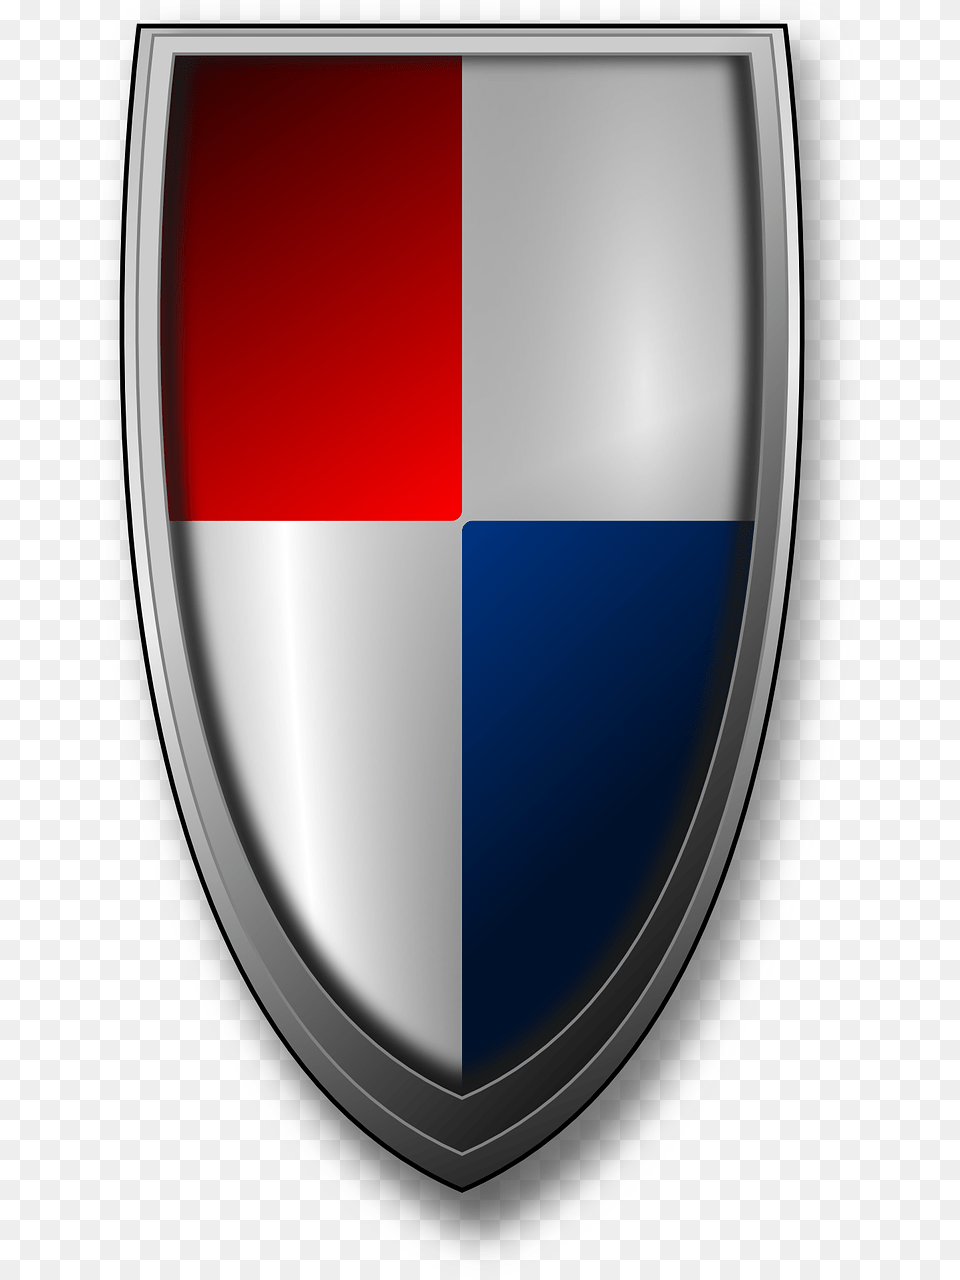 Vector Shield Escudo Azul Y Rojo, Armor, Electronics, Mobile Phone, Phone Png Image